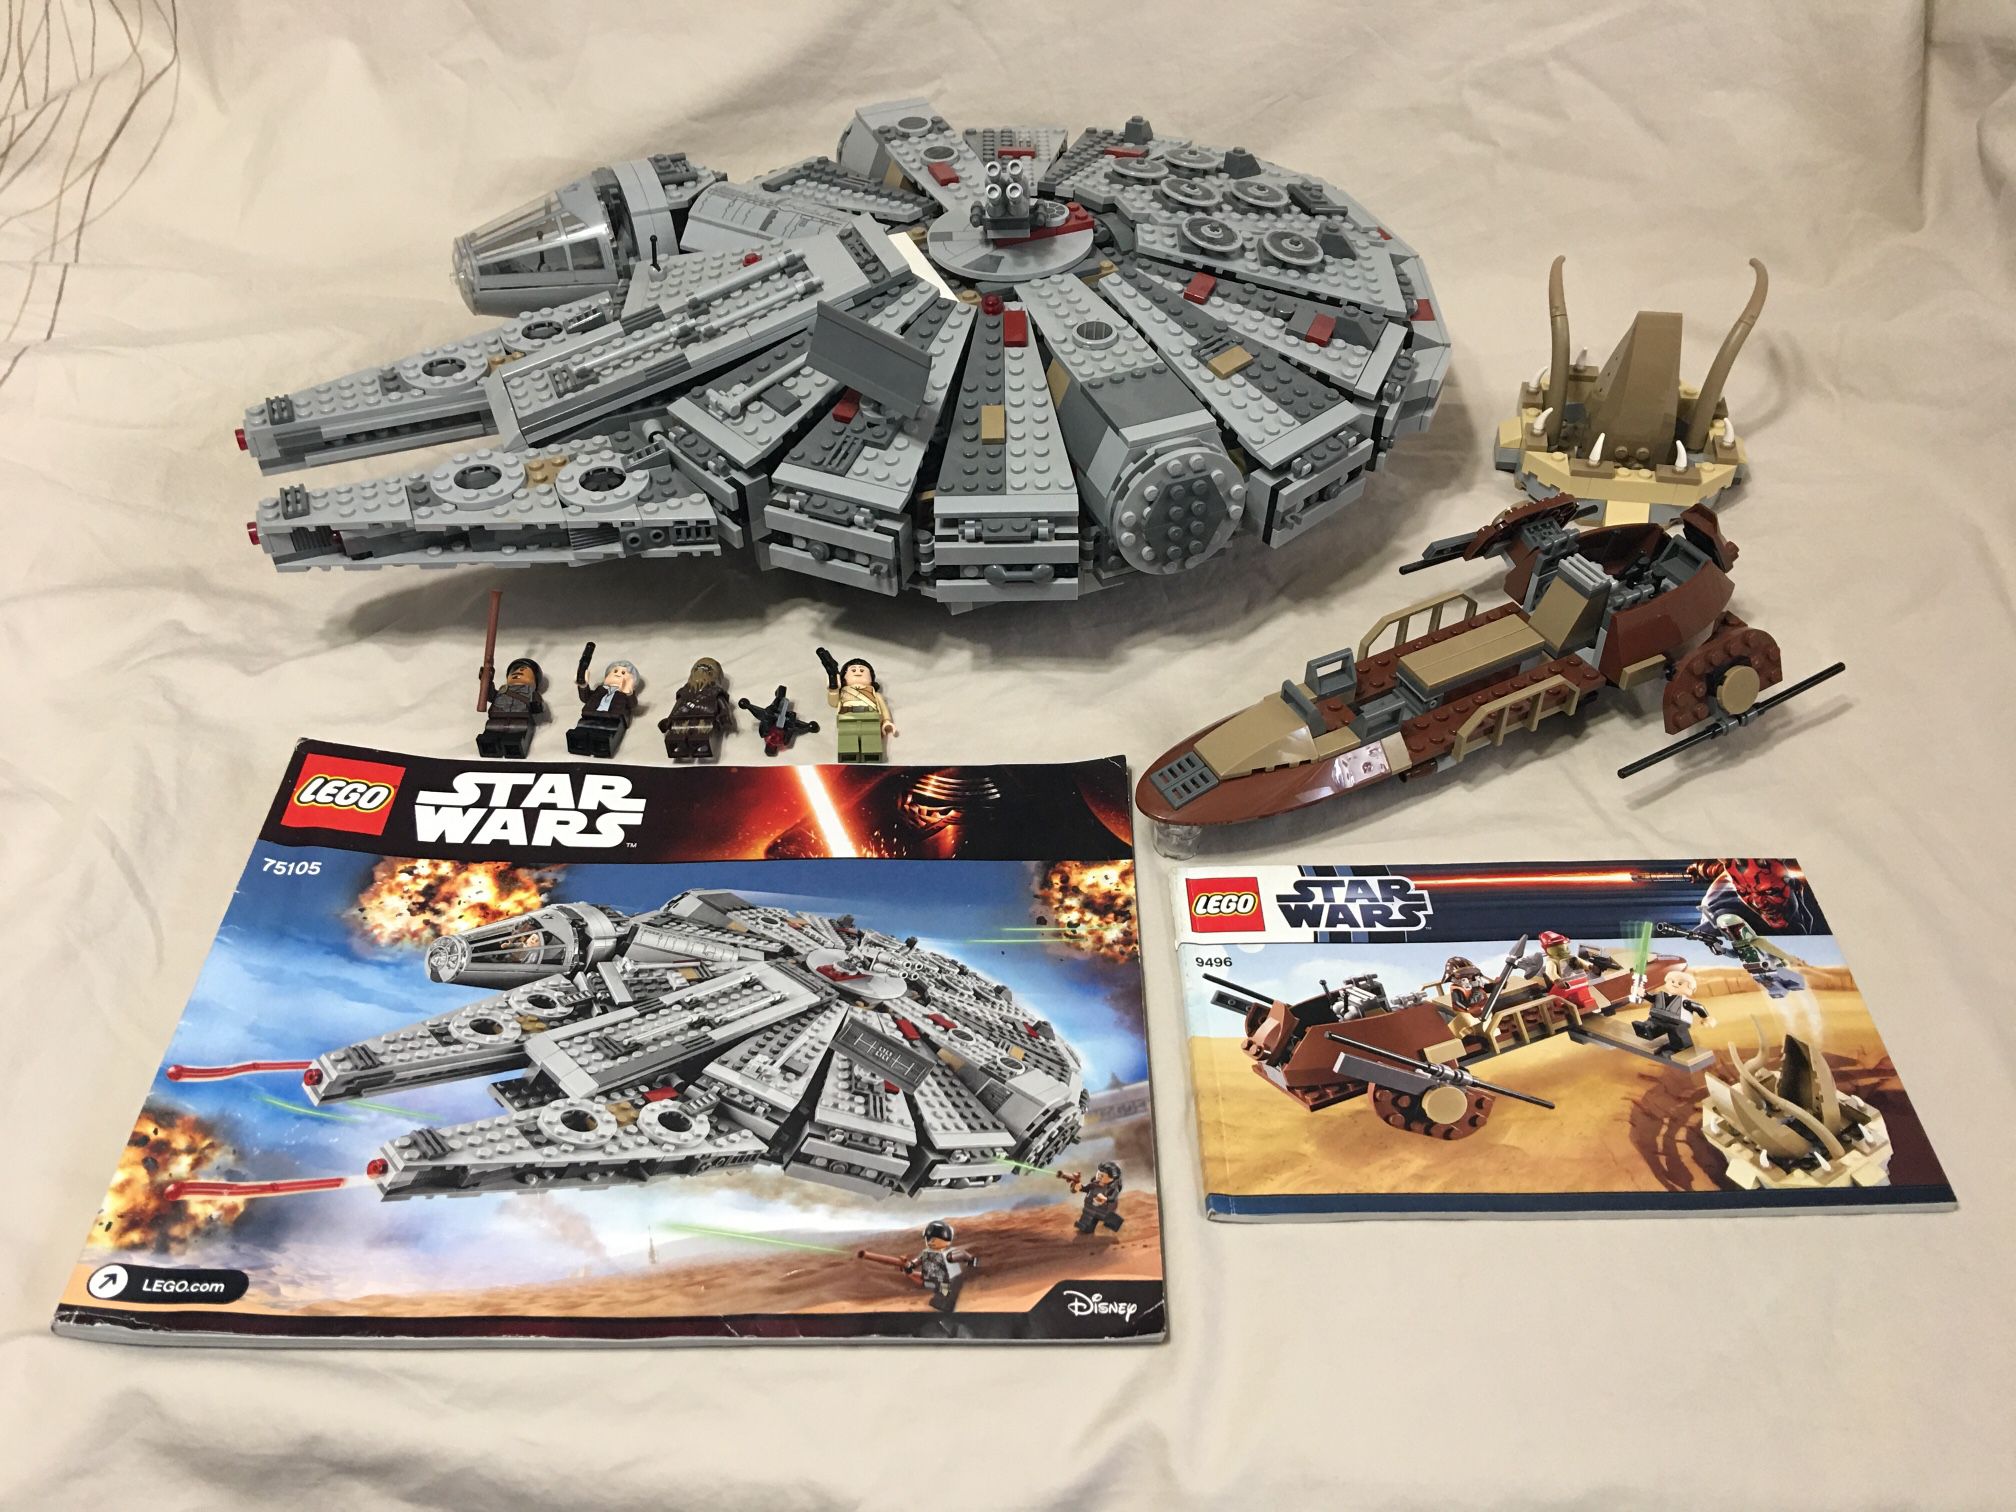 Lego 75105 Millennium Falcon Desert Skiff Star Wars for Sale in San Jose, CA -